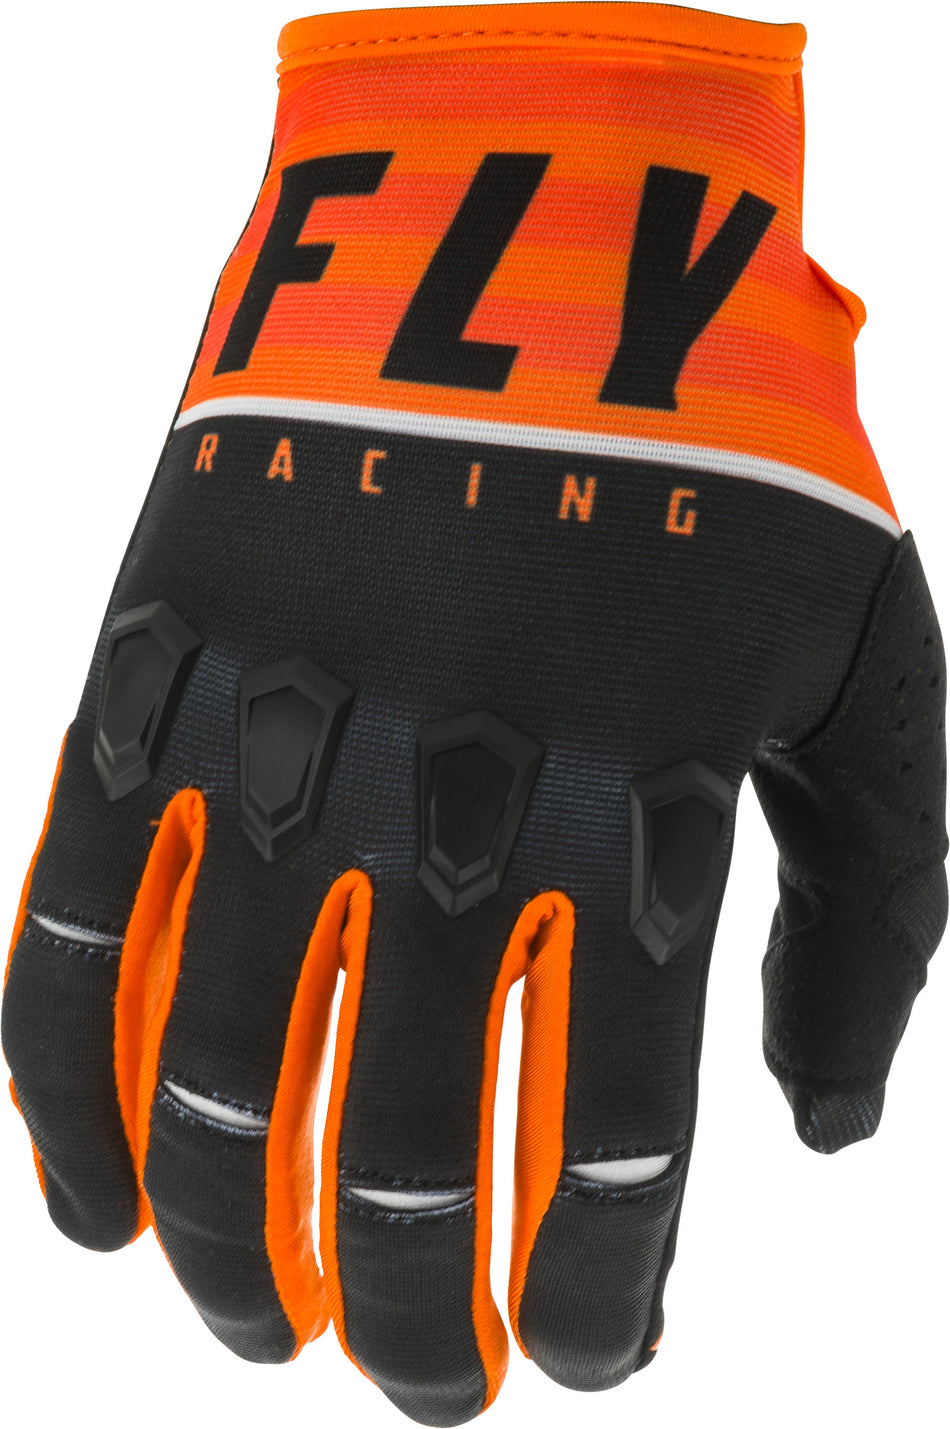 FLY RACING Kinetic K120 Gloves Orange/Black/White Sz 13 373-41713